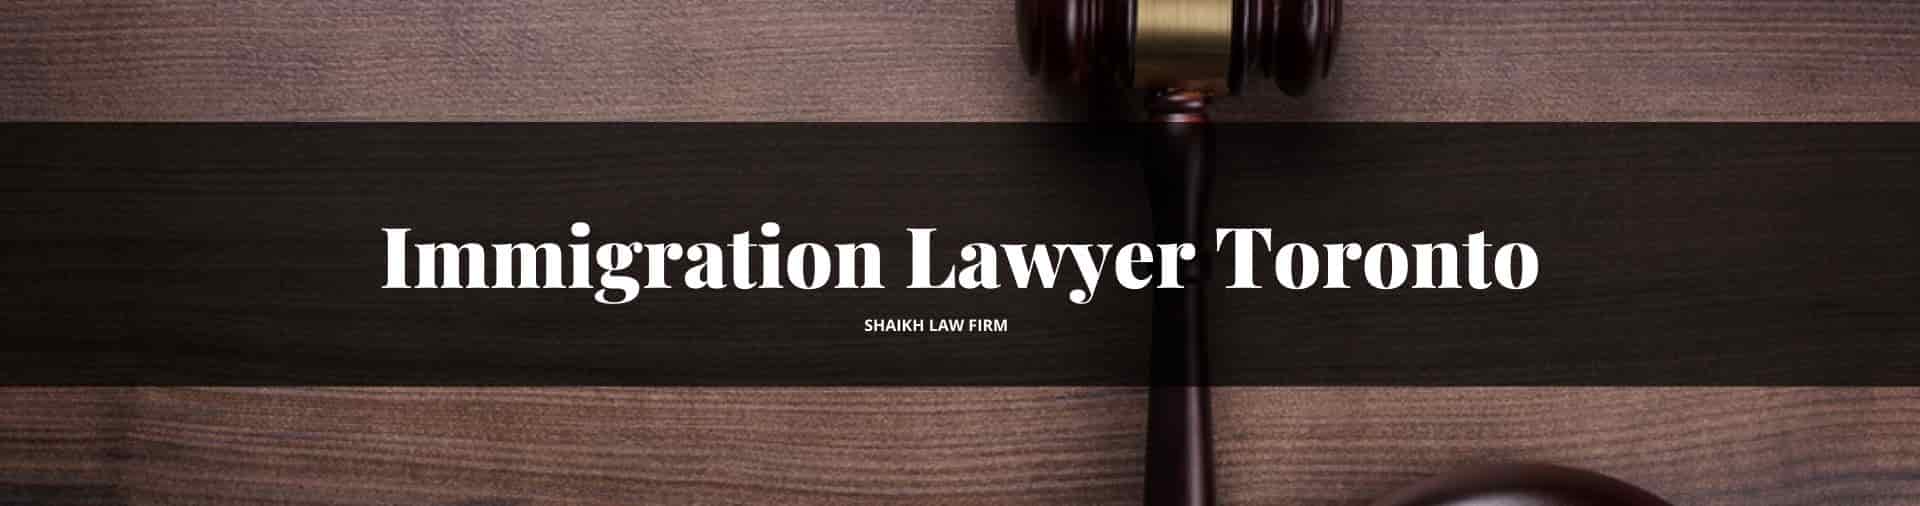 Immigration Lawyer Toronto